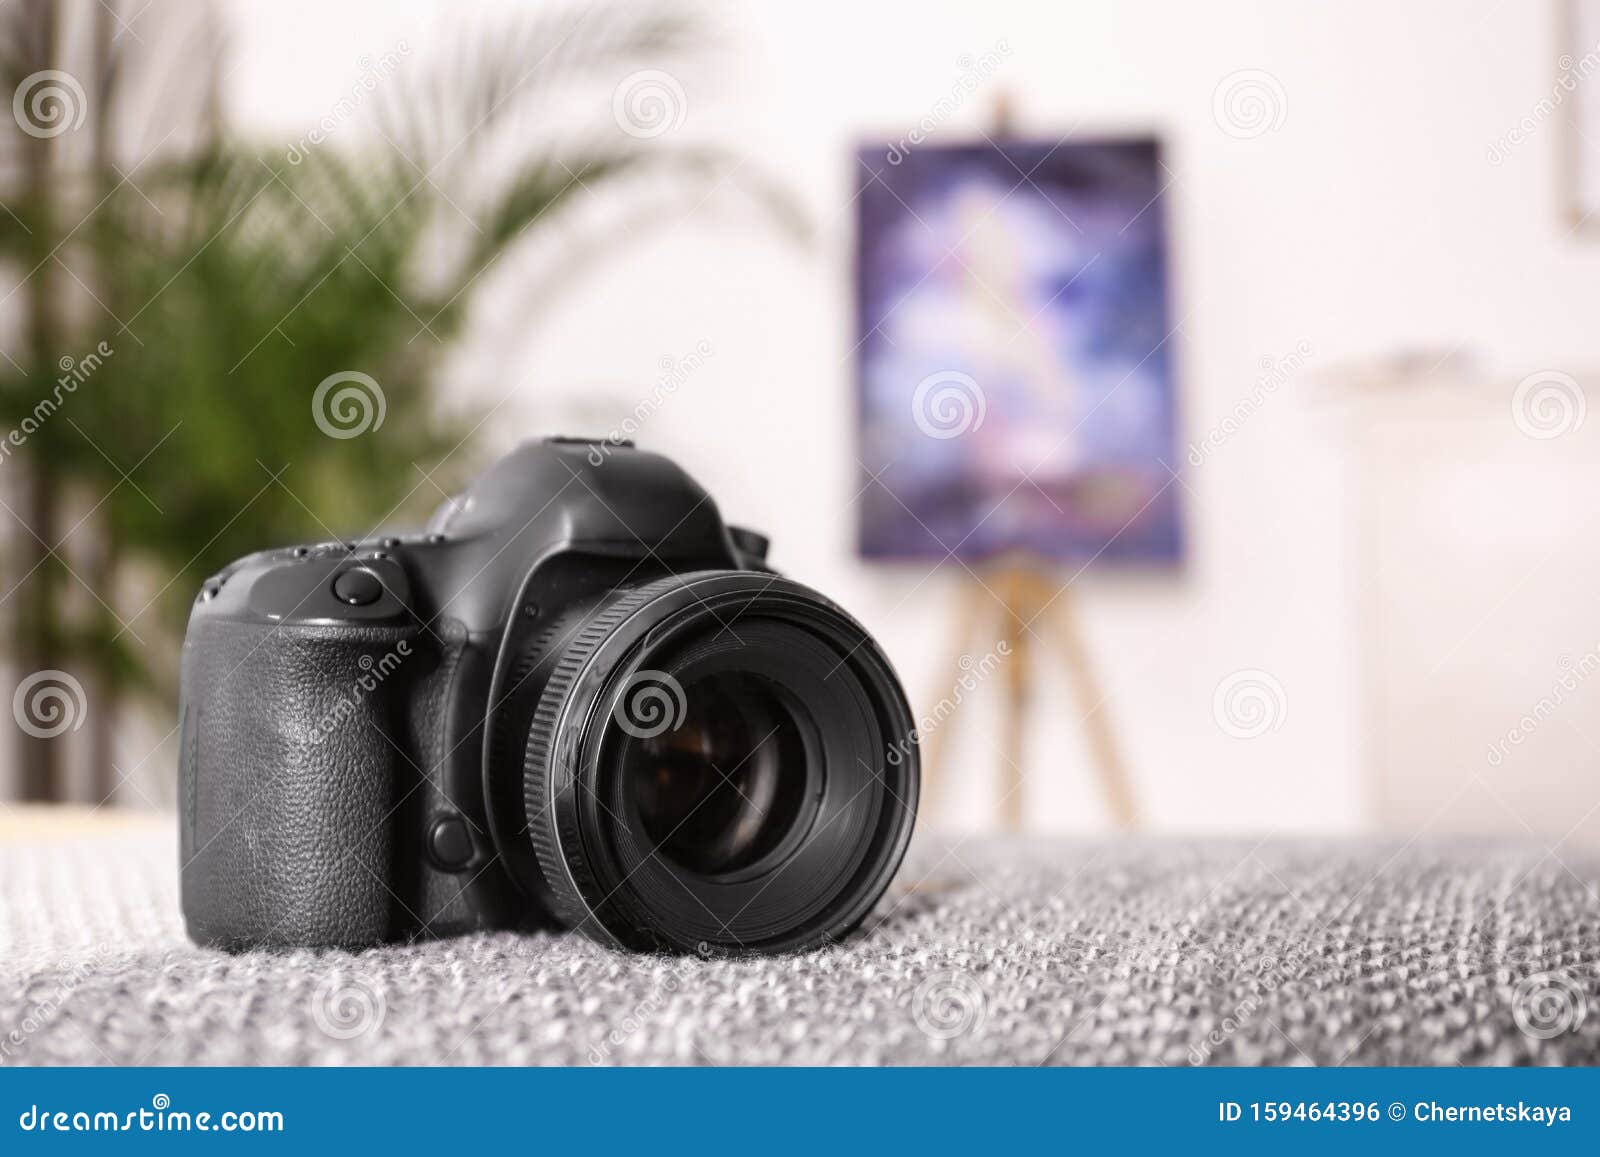 Professional Digital Camera Against Blurred Background Stock Photo